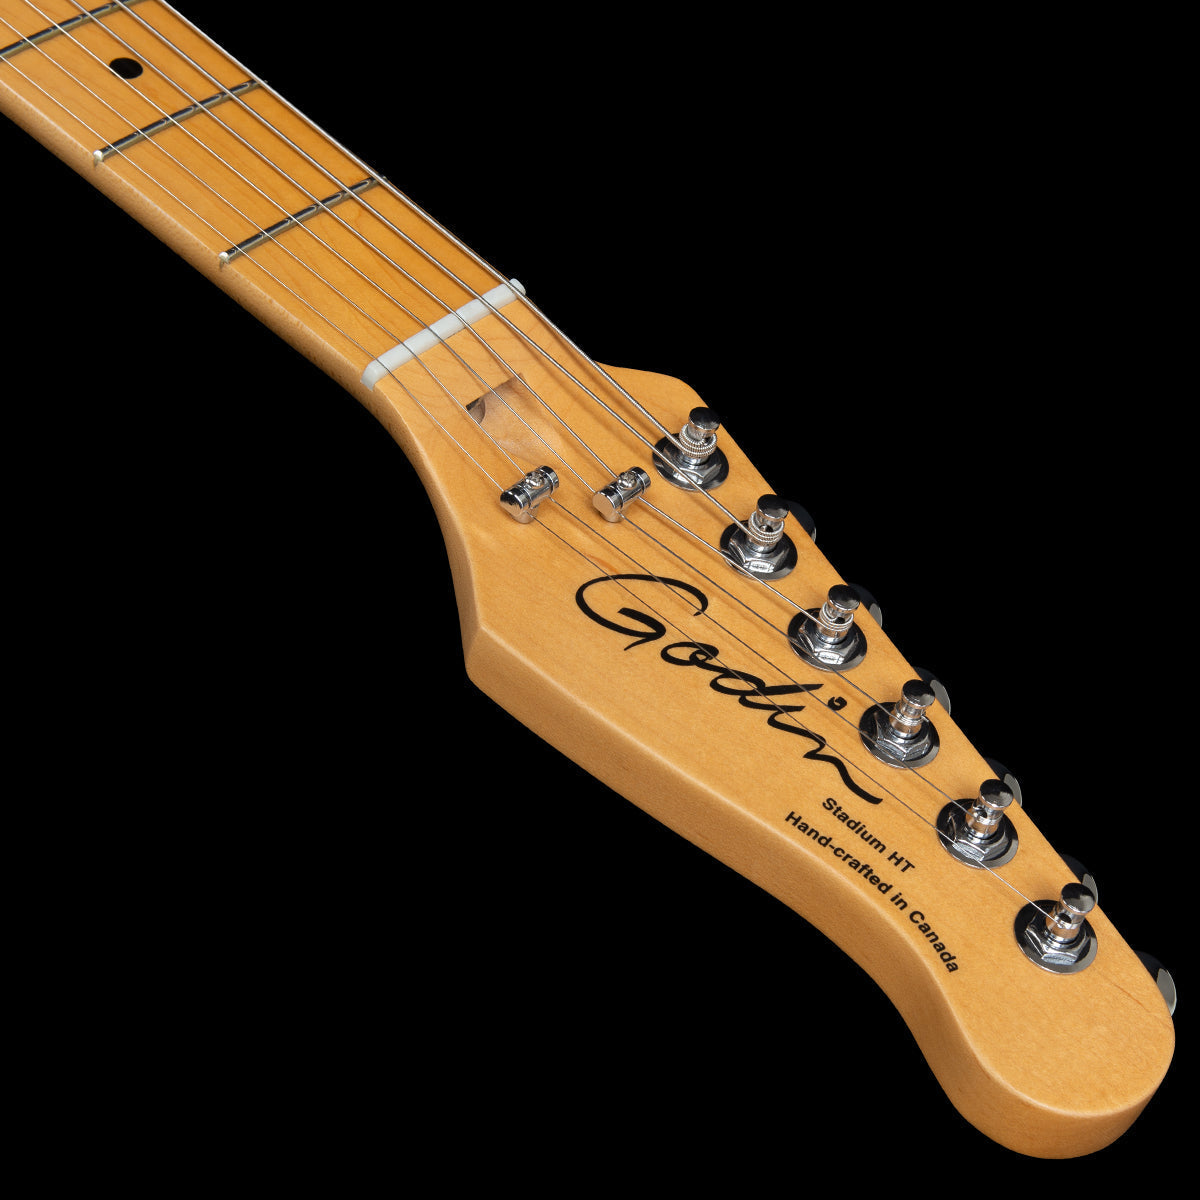 Godin Stadium HT Electric Guitar ~ Havana Brown MN, Electric Guitar for sale at Richards Guitars.